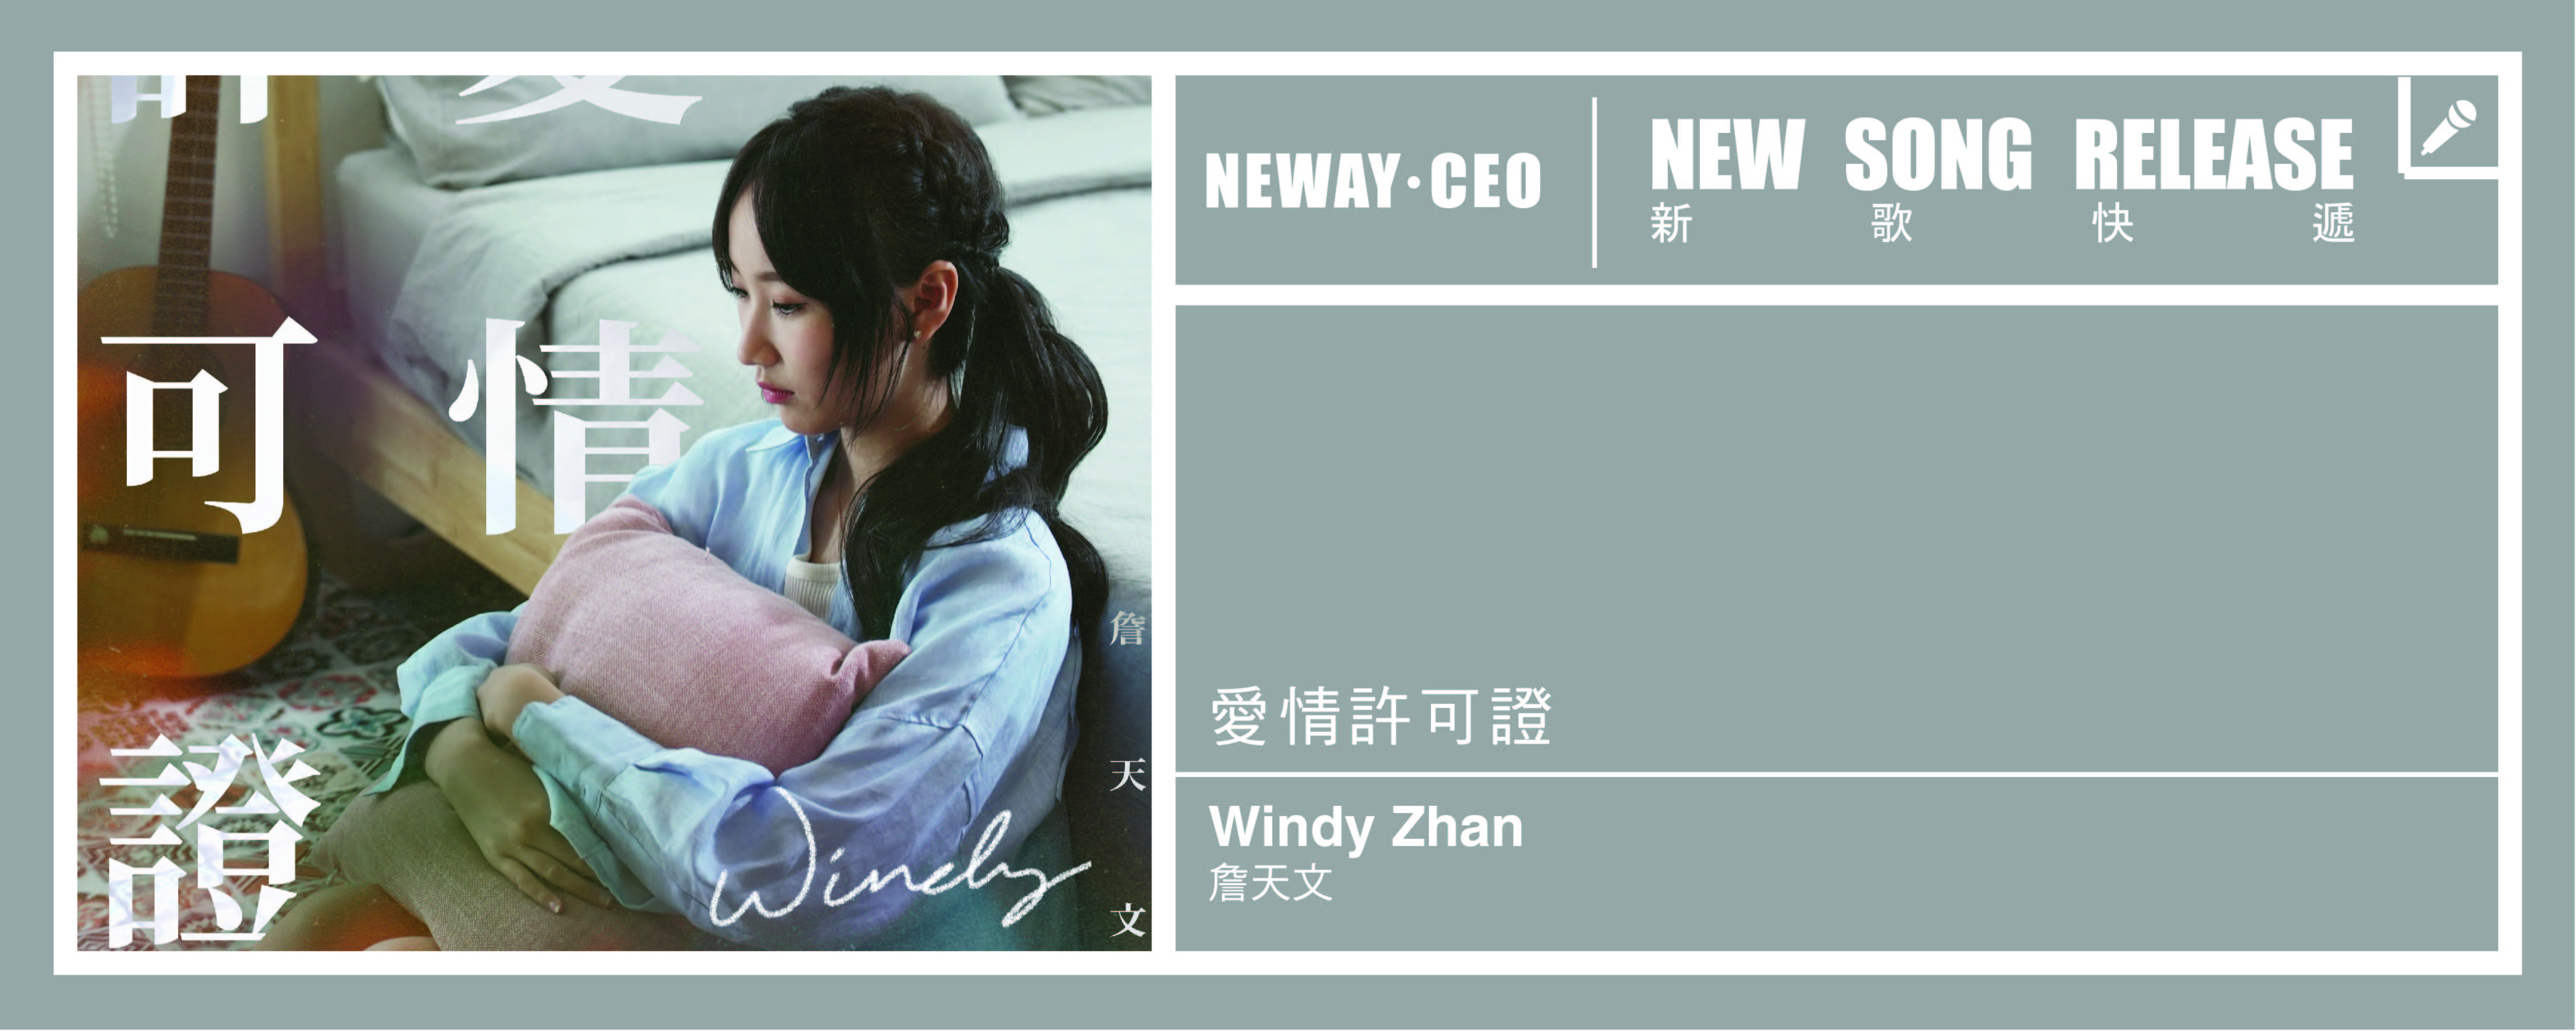 Neway New Release - Windy Zhan